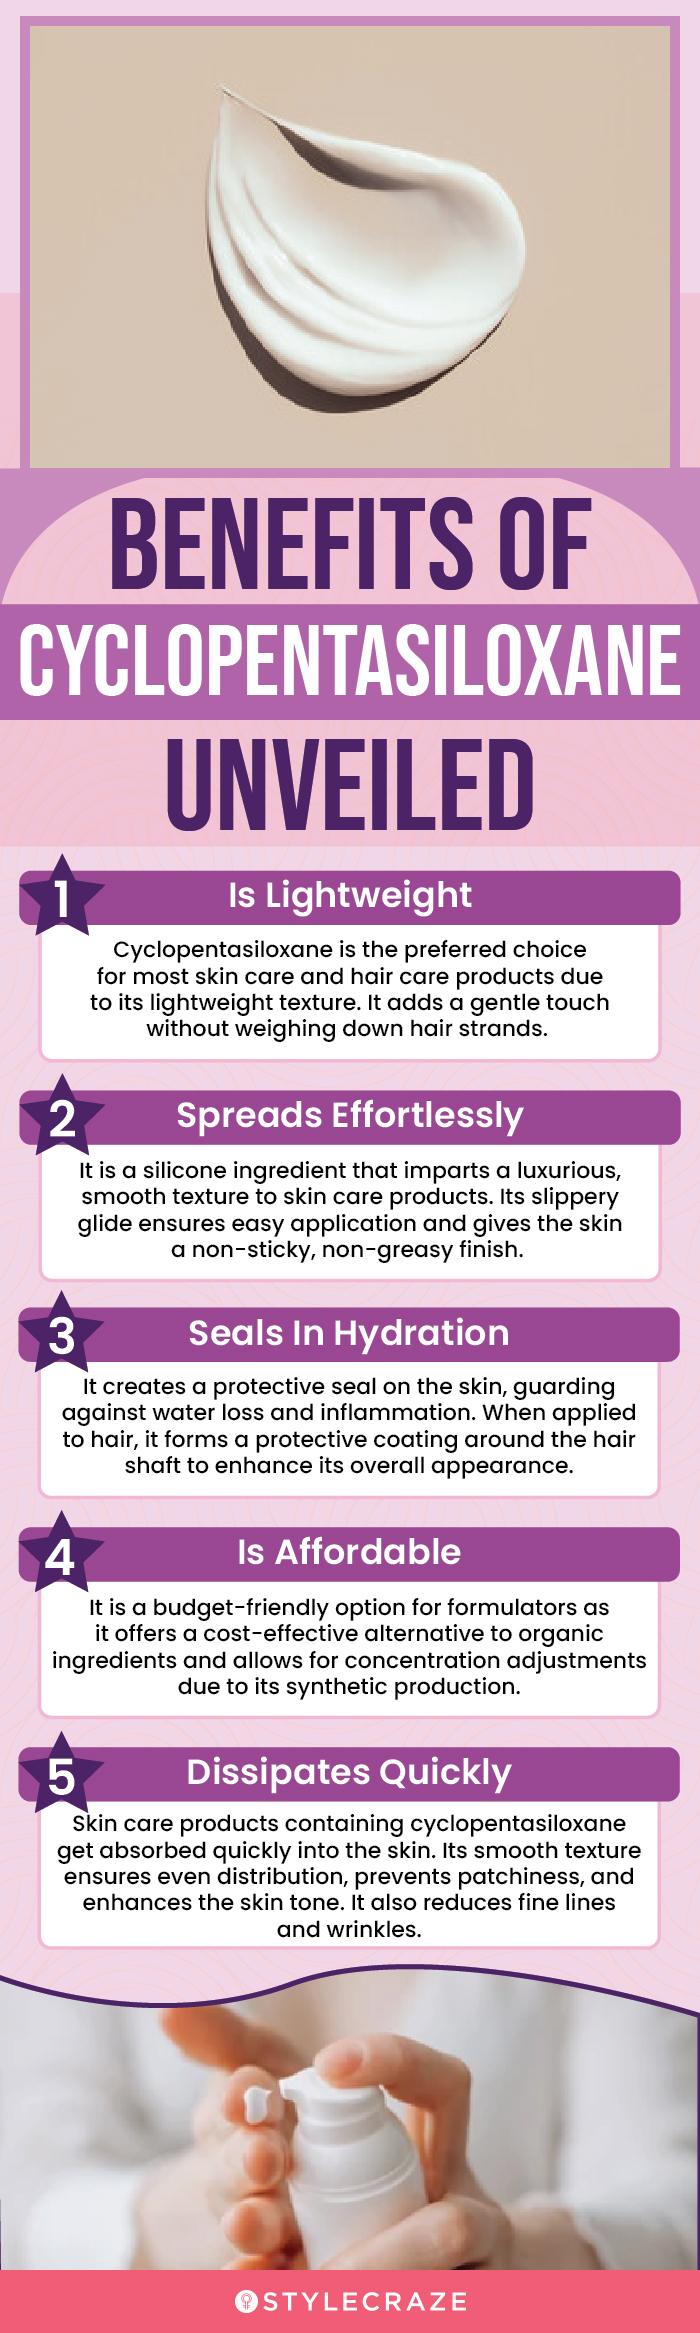 benefits of cyclopentasiloxane unveiled(infographic)